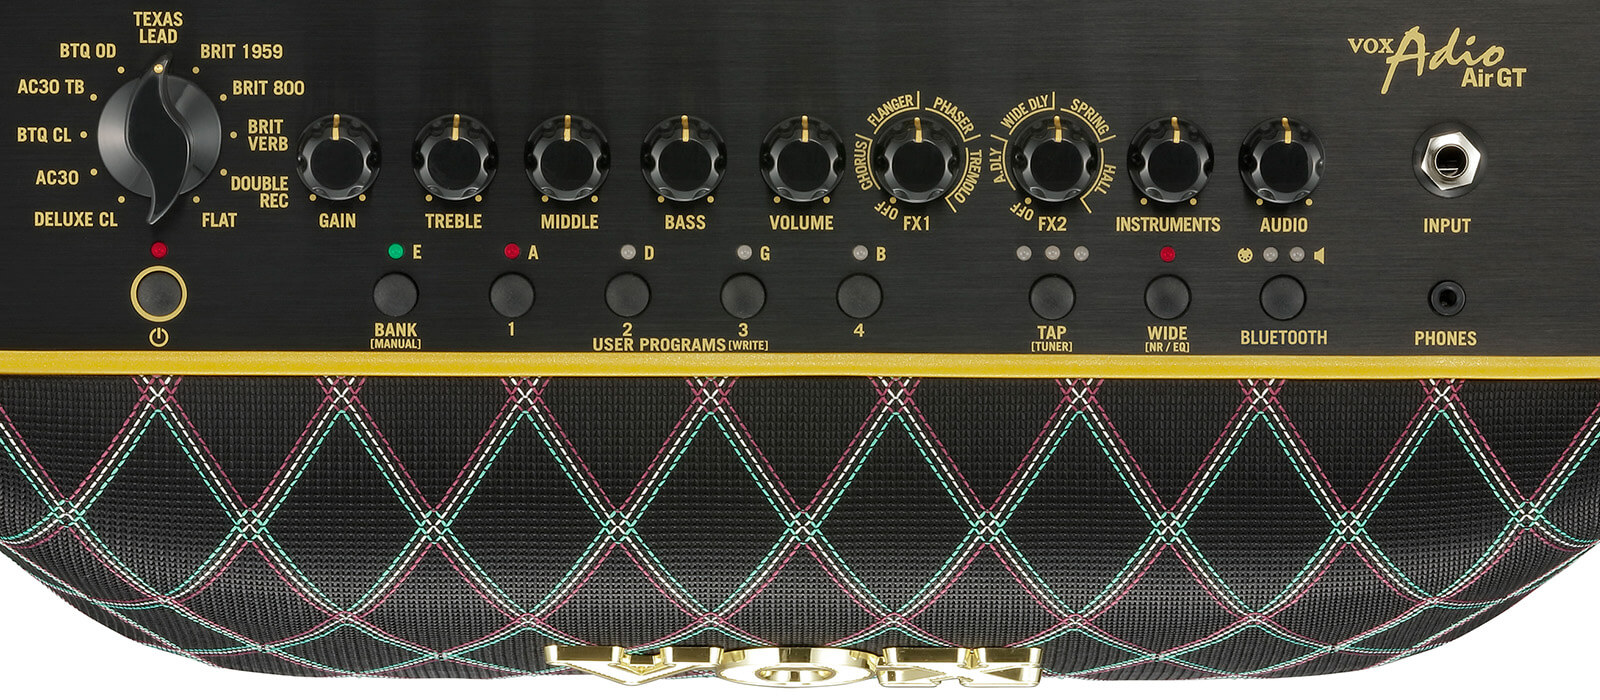 Closeup of controls on VOX Audio Air GT